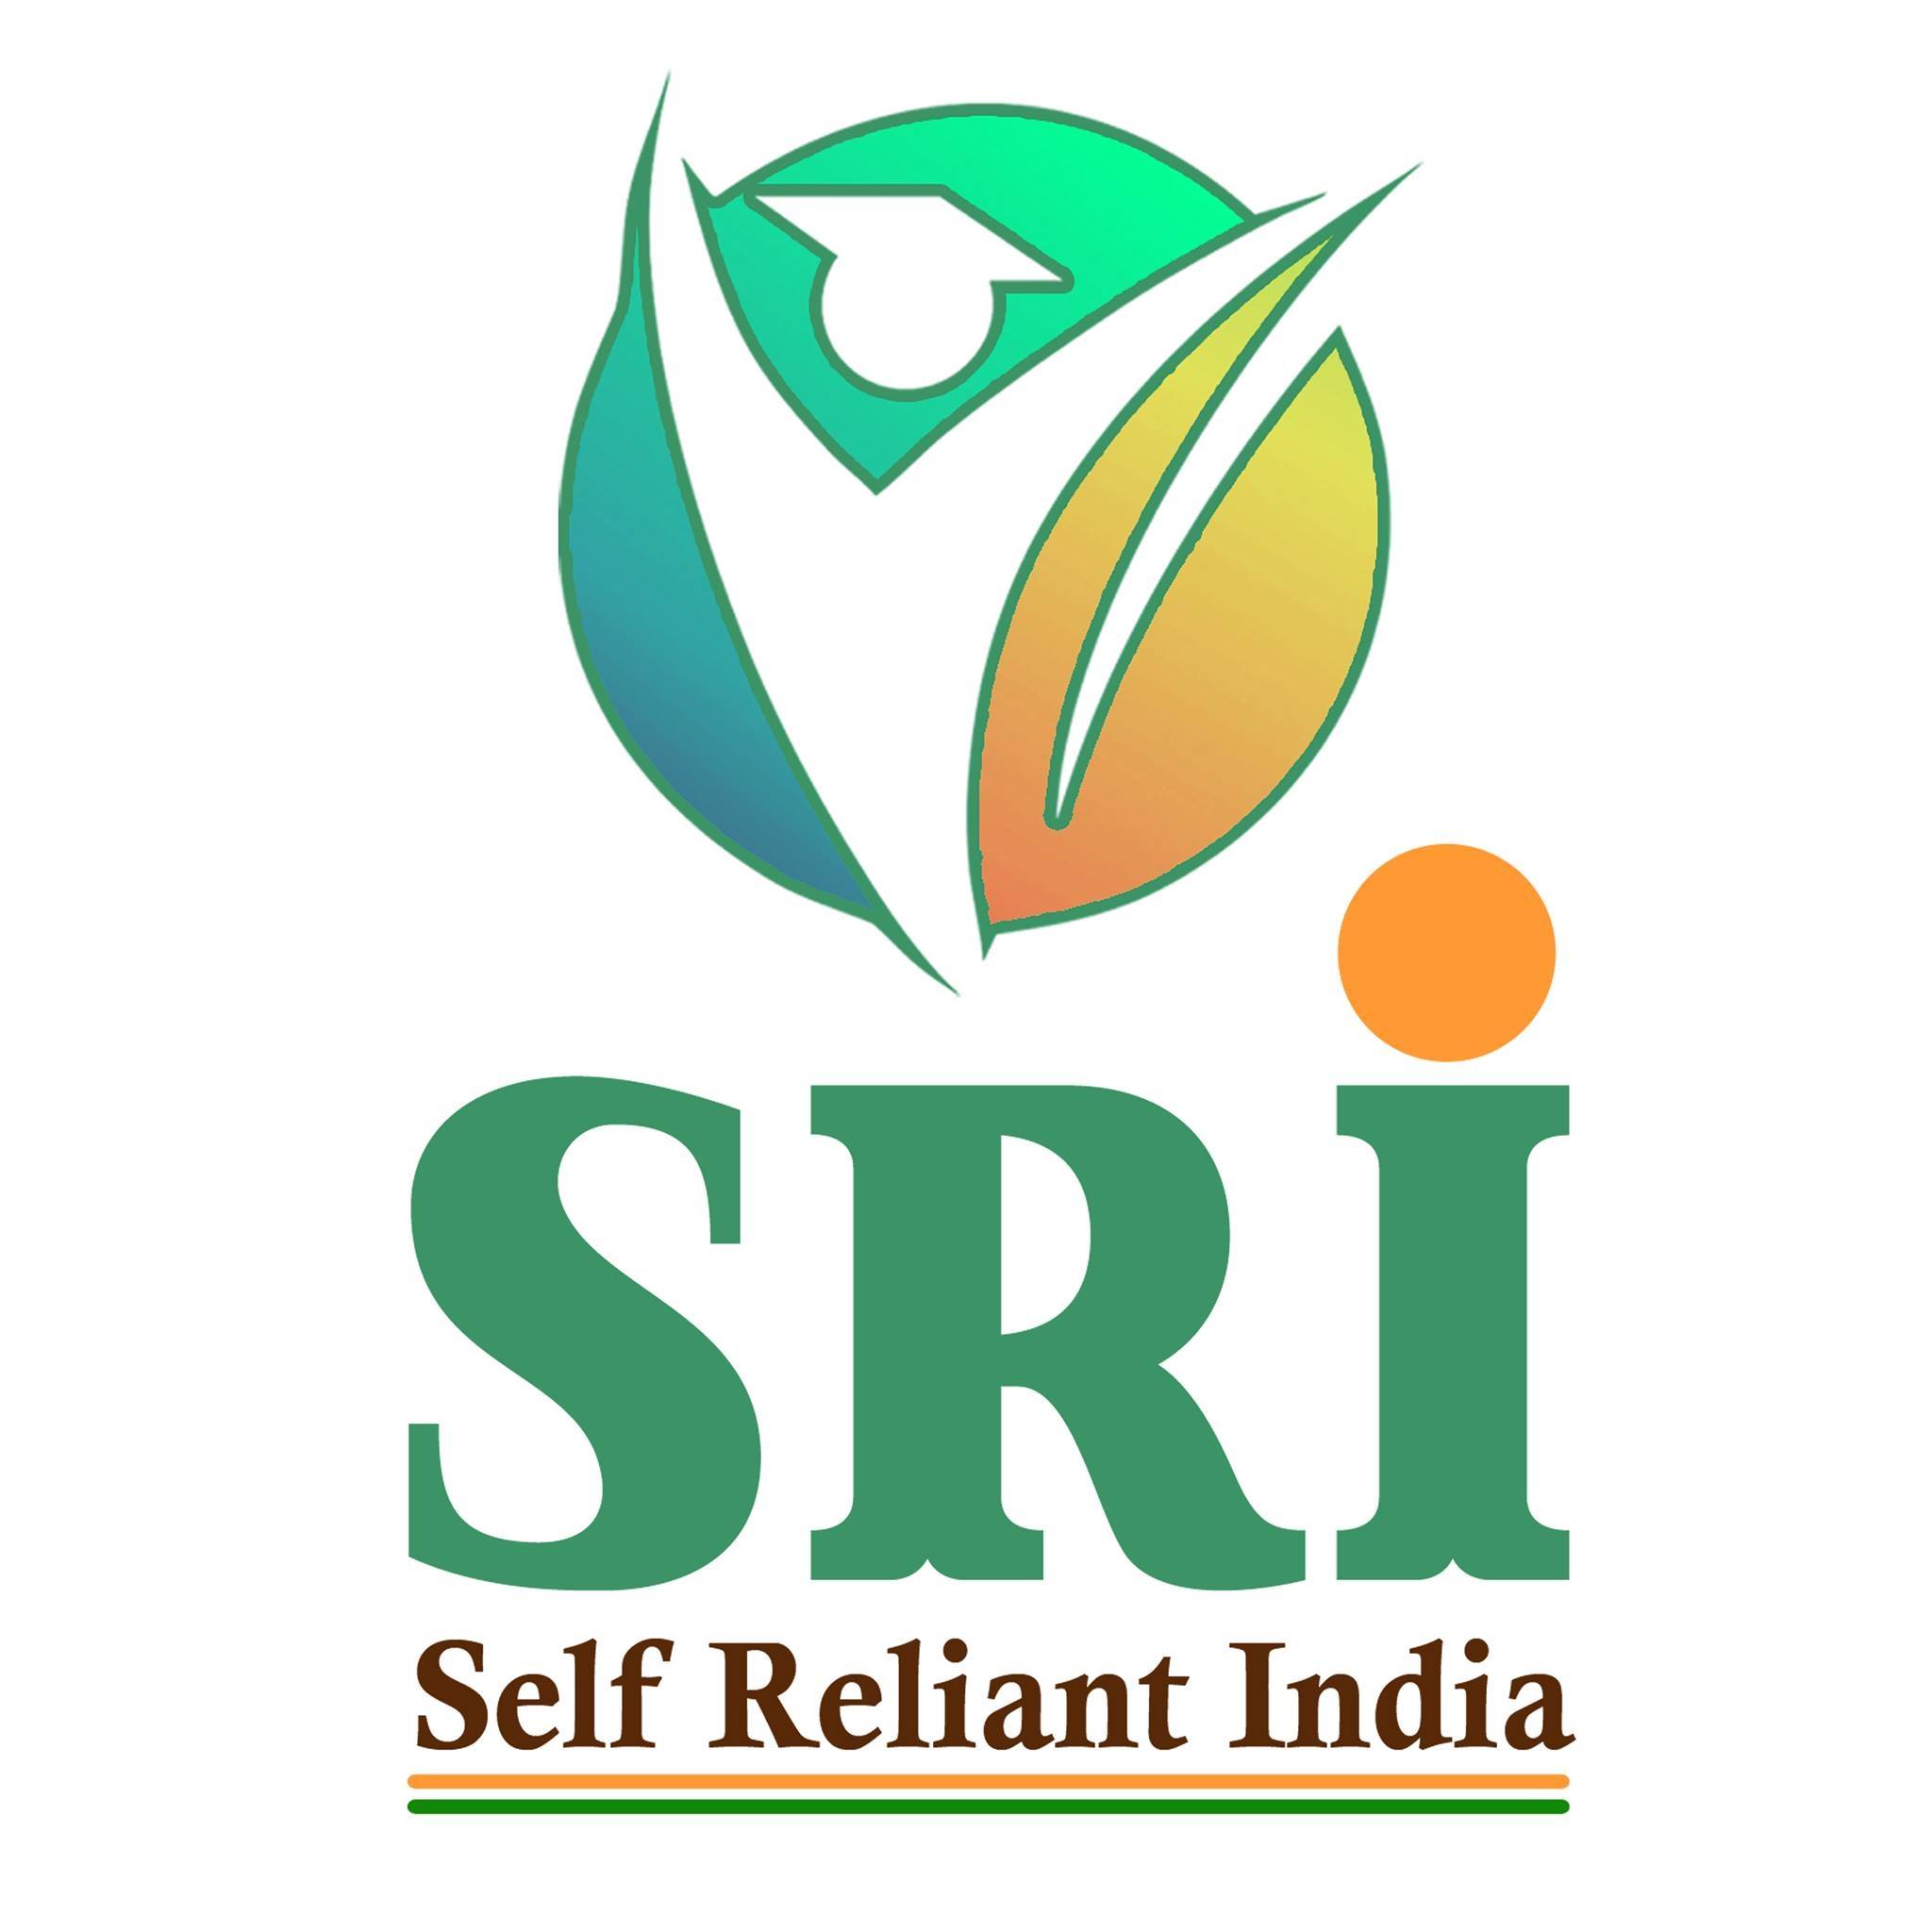 Self Reliant India (SRI) Foundation